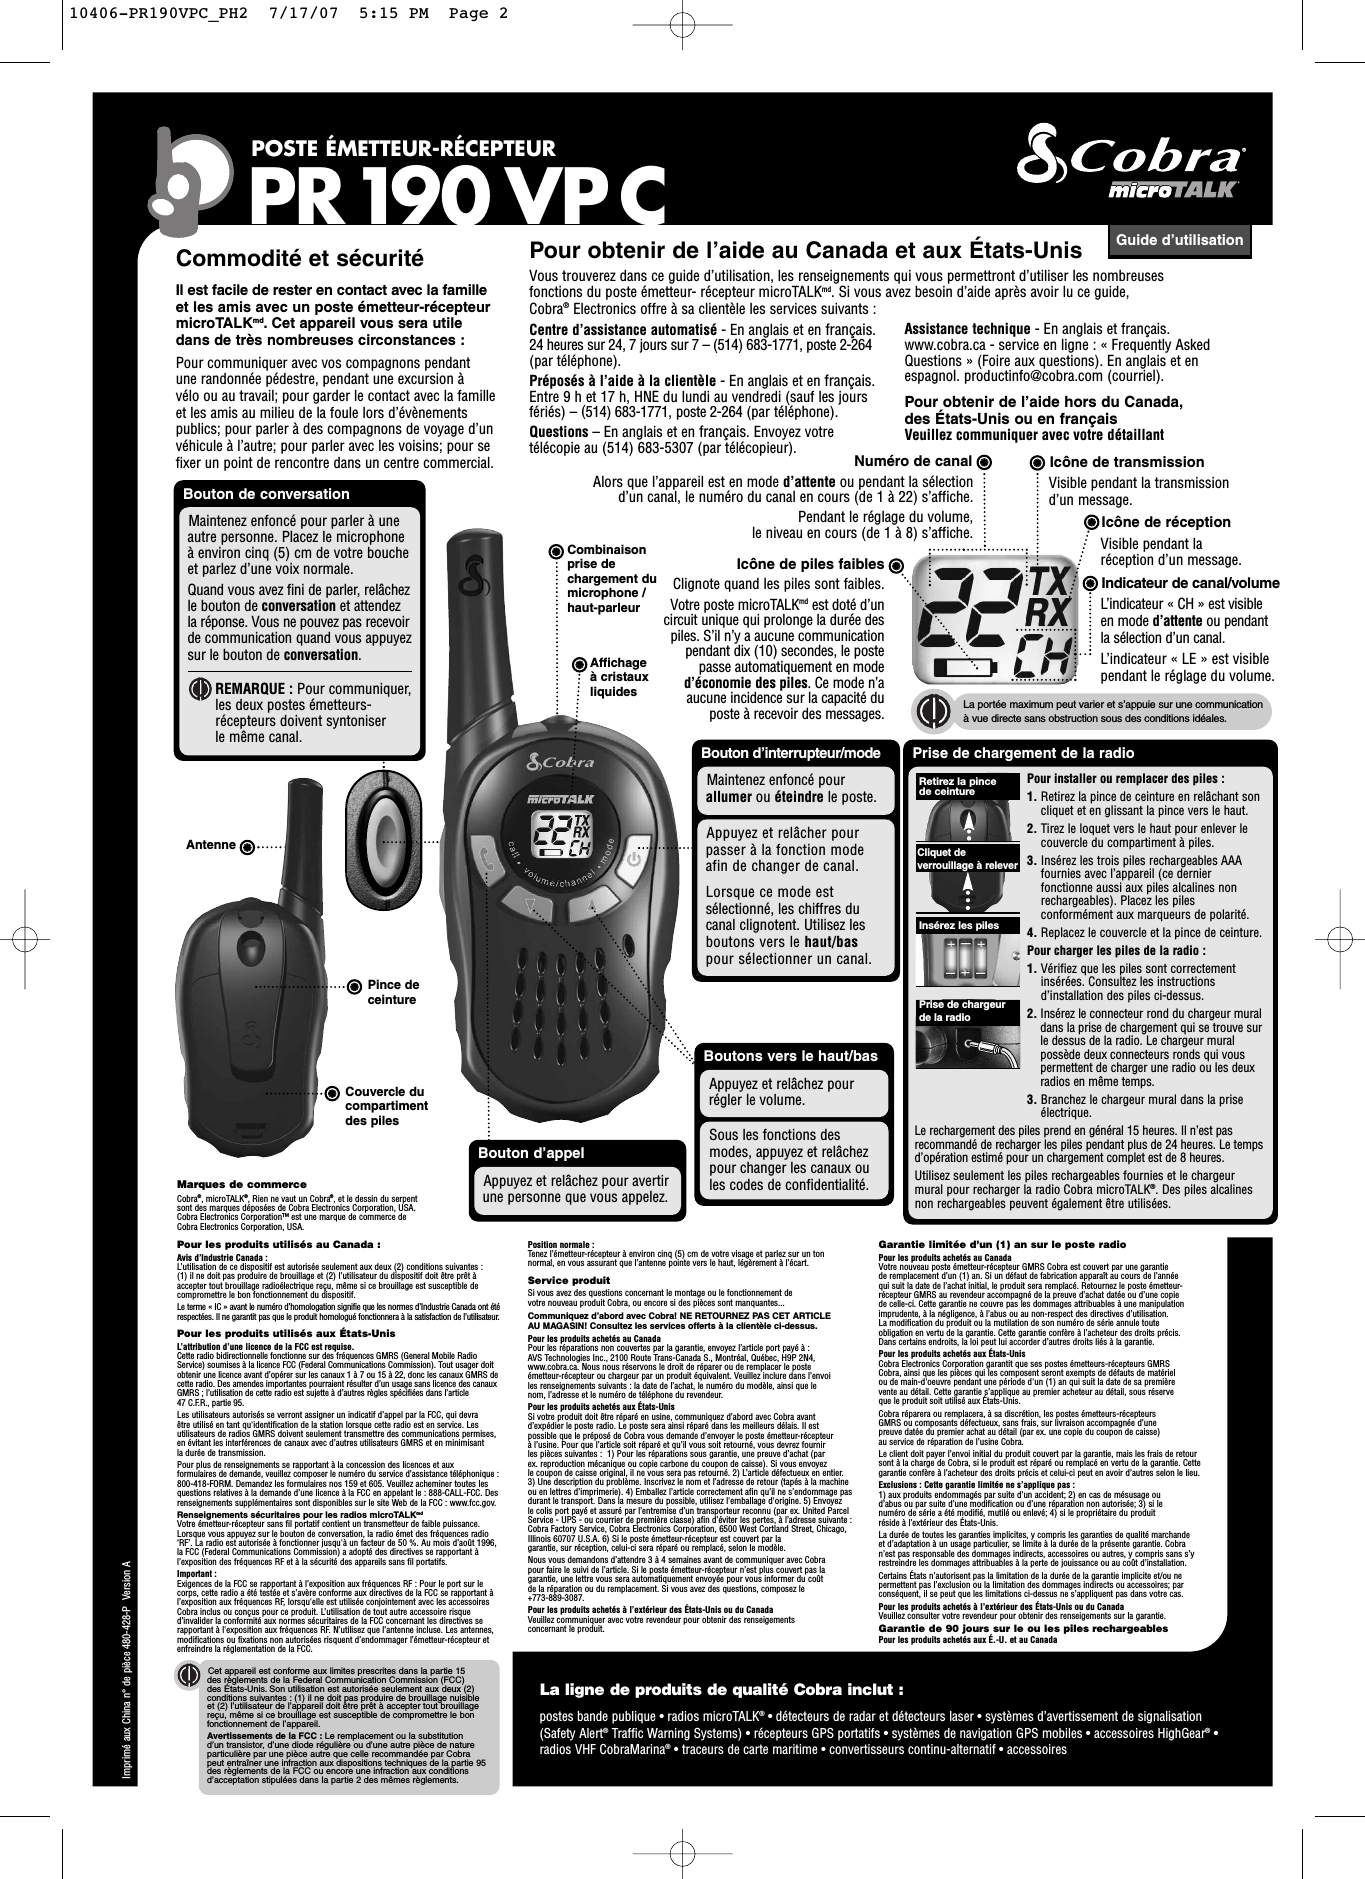 Cobra Electronics PR190 FRS/GMRS TRANSCEIVER User Manual 190